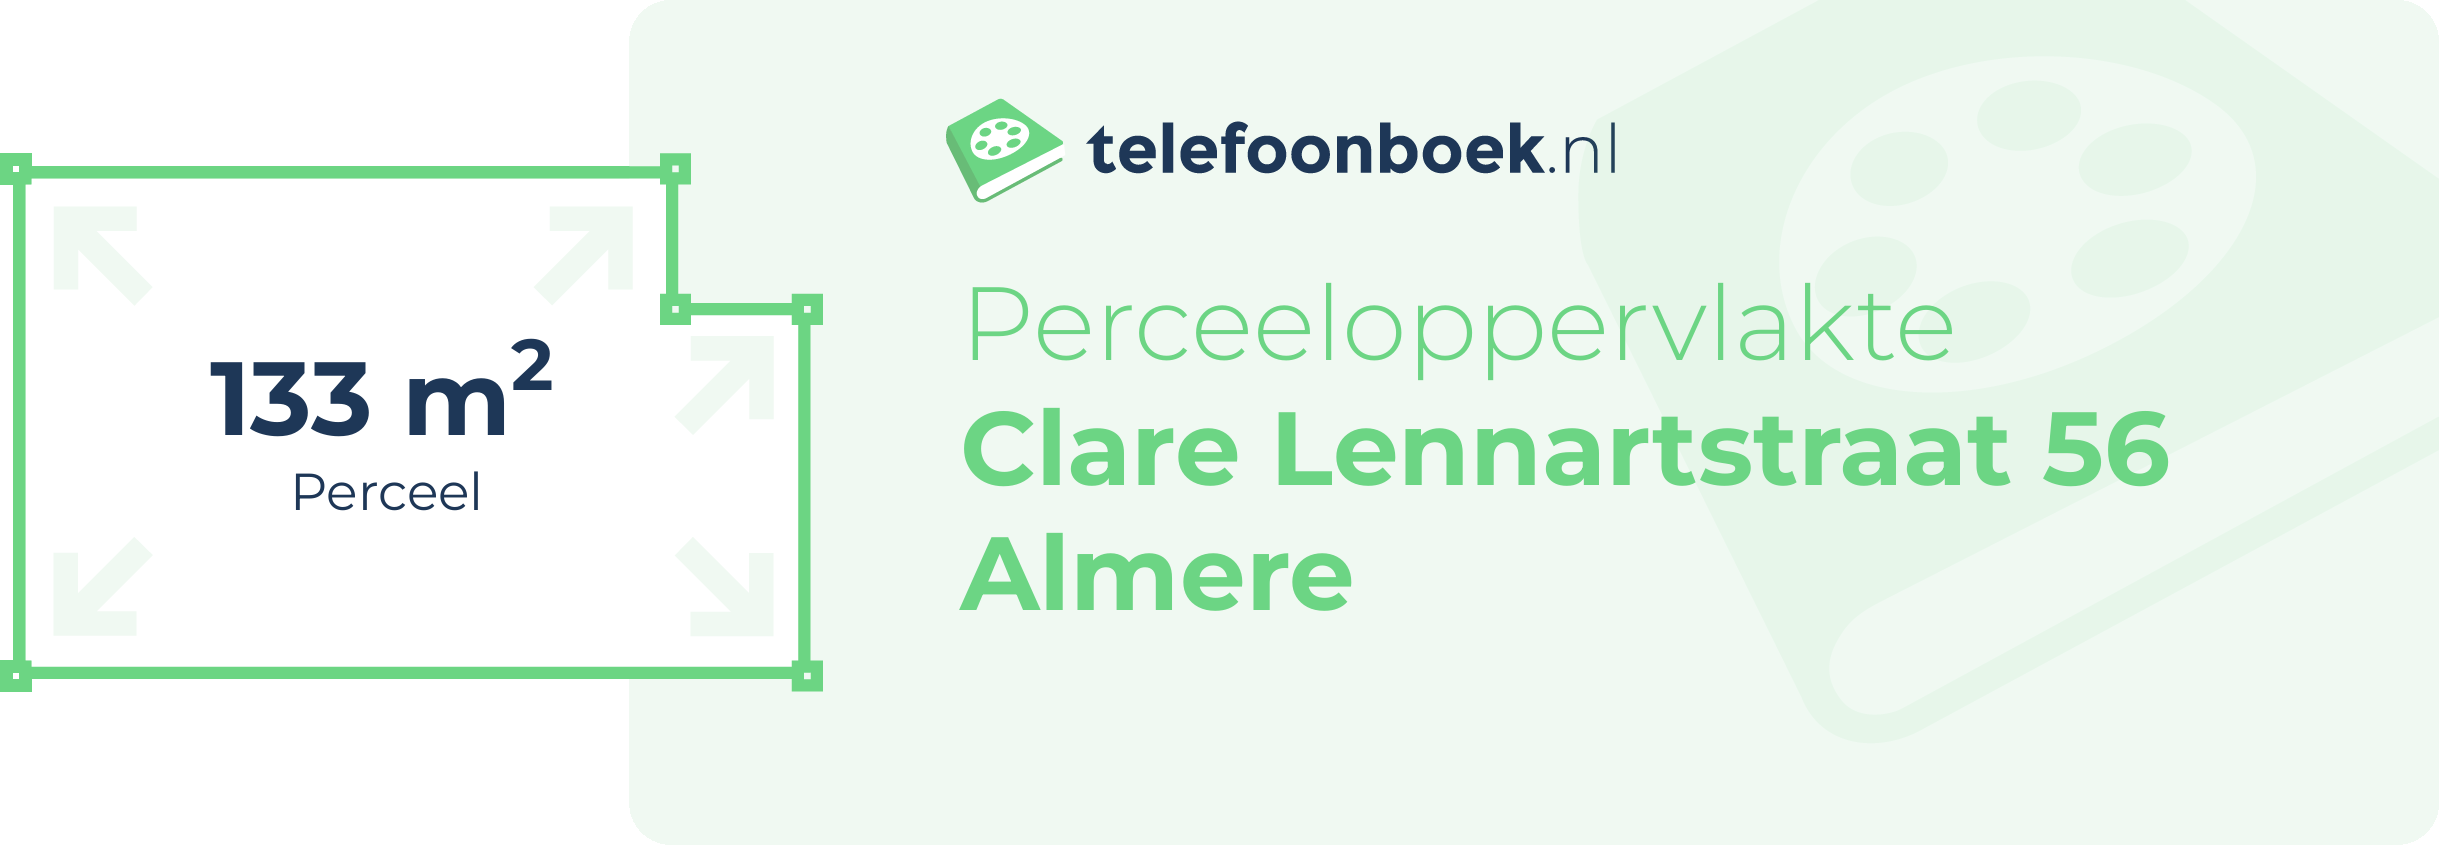 Perceeloppervlakte Clare Lennartstraat 56 Almere